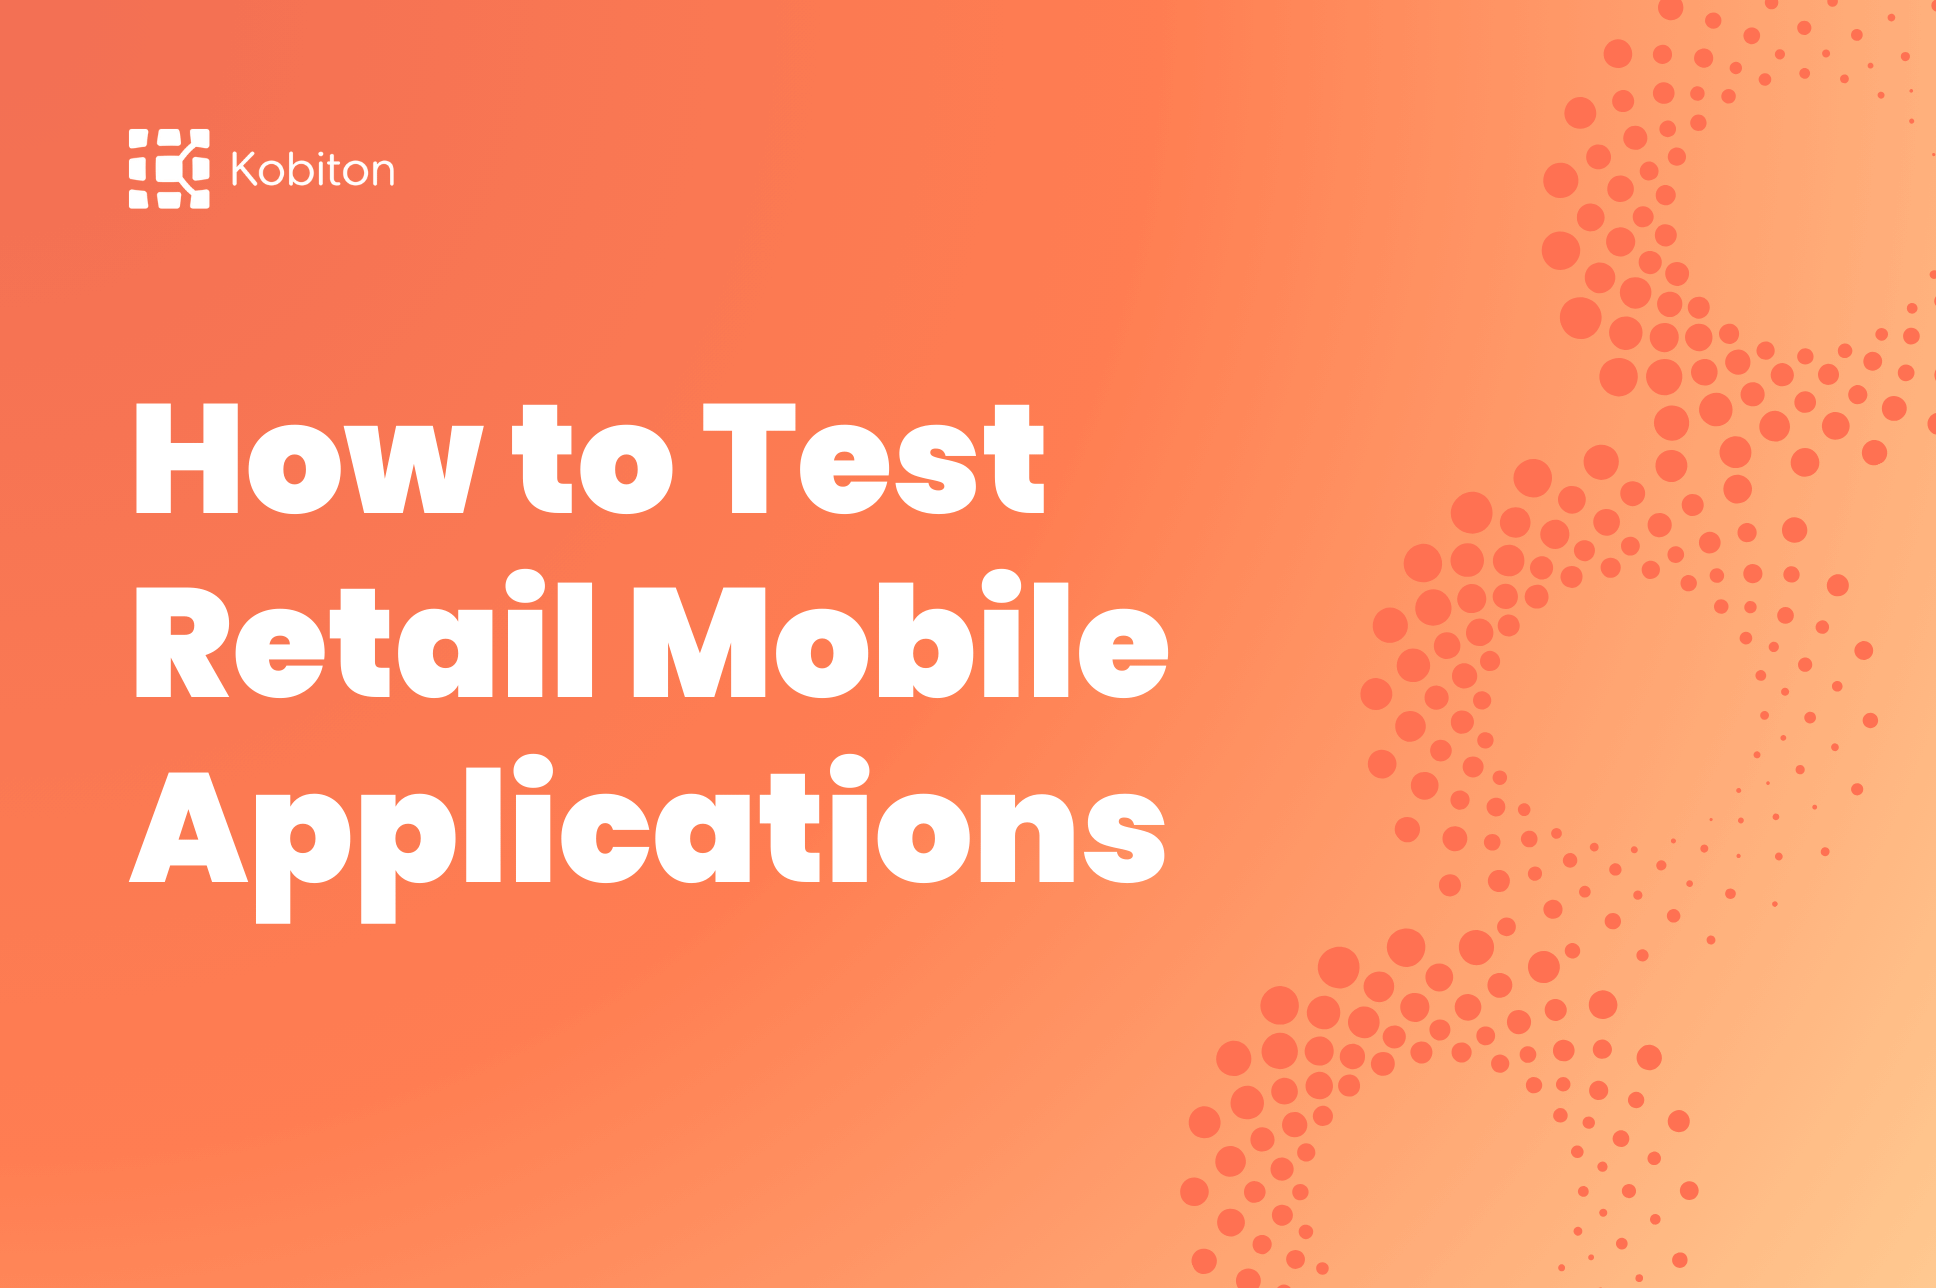 Retail Mobile Application